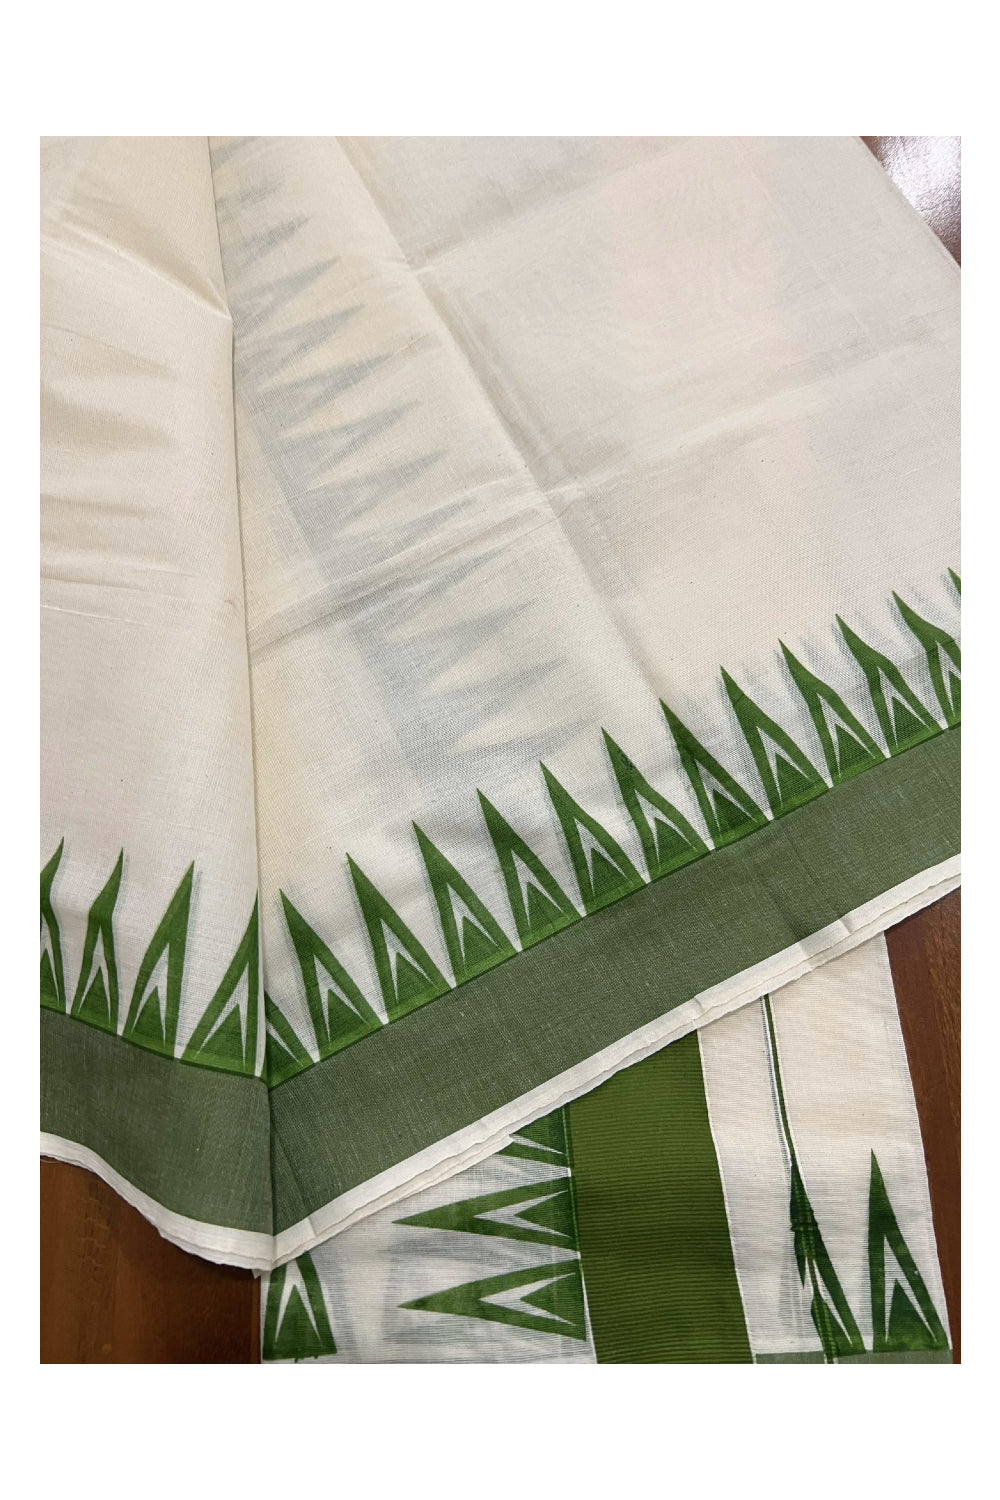 Kerala Cotton Mundum Neriyathum (Set Mundu) with Olive Green Temple Block Print Border